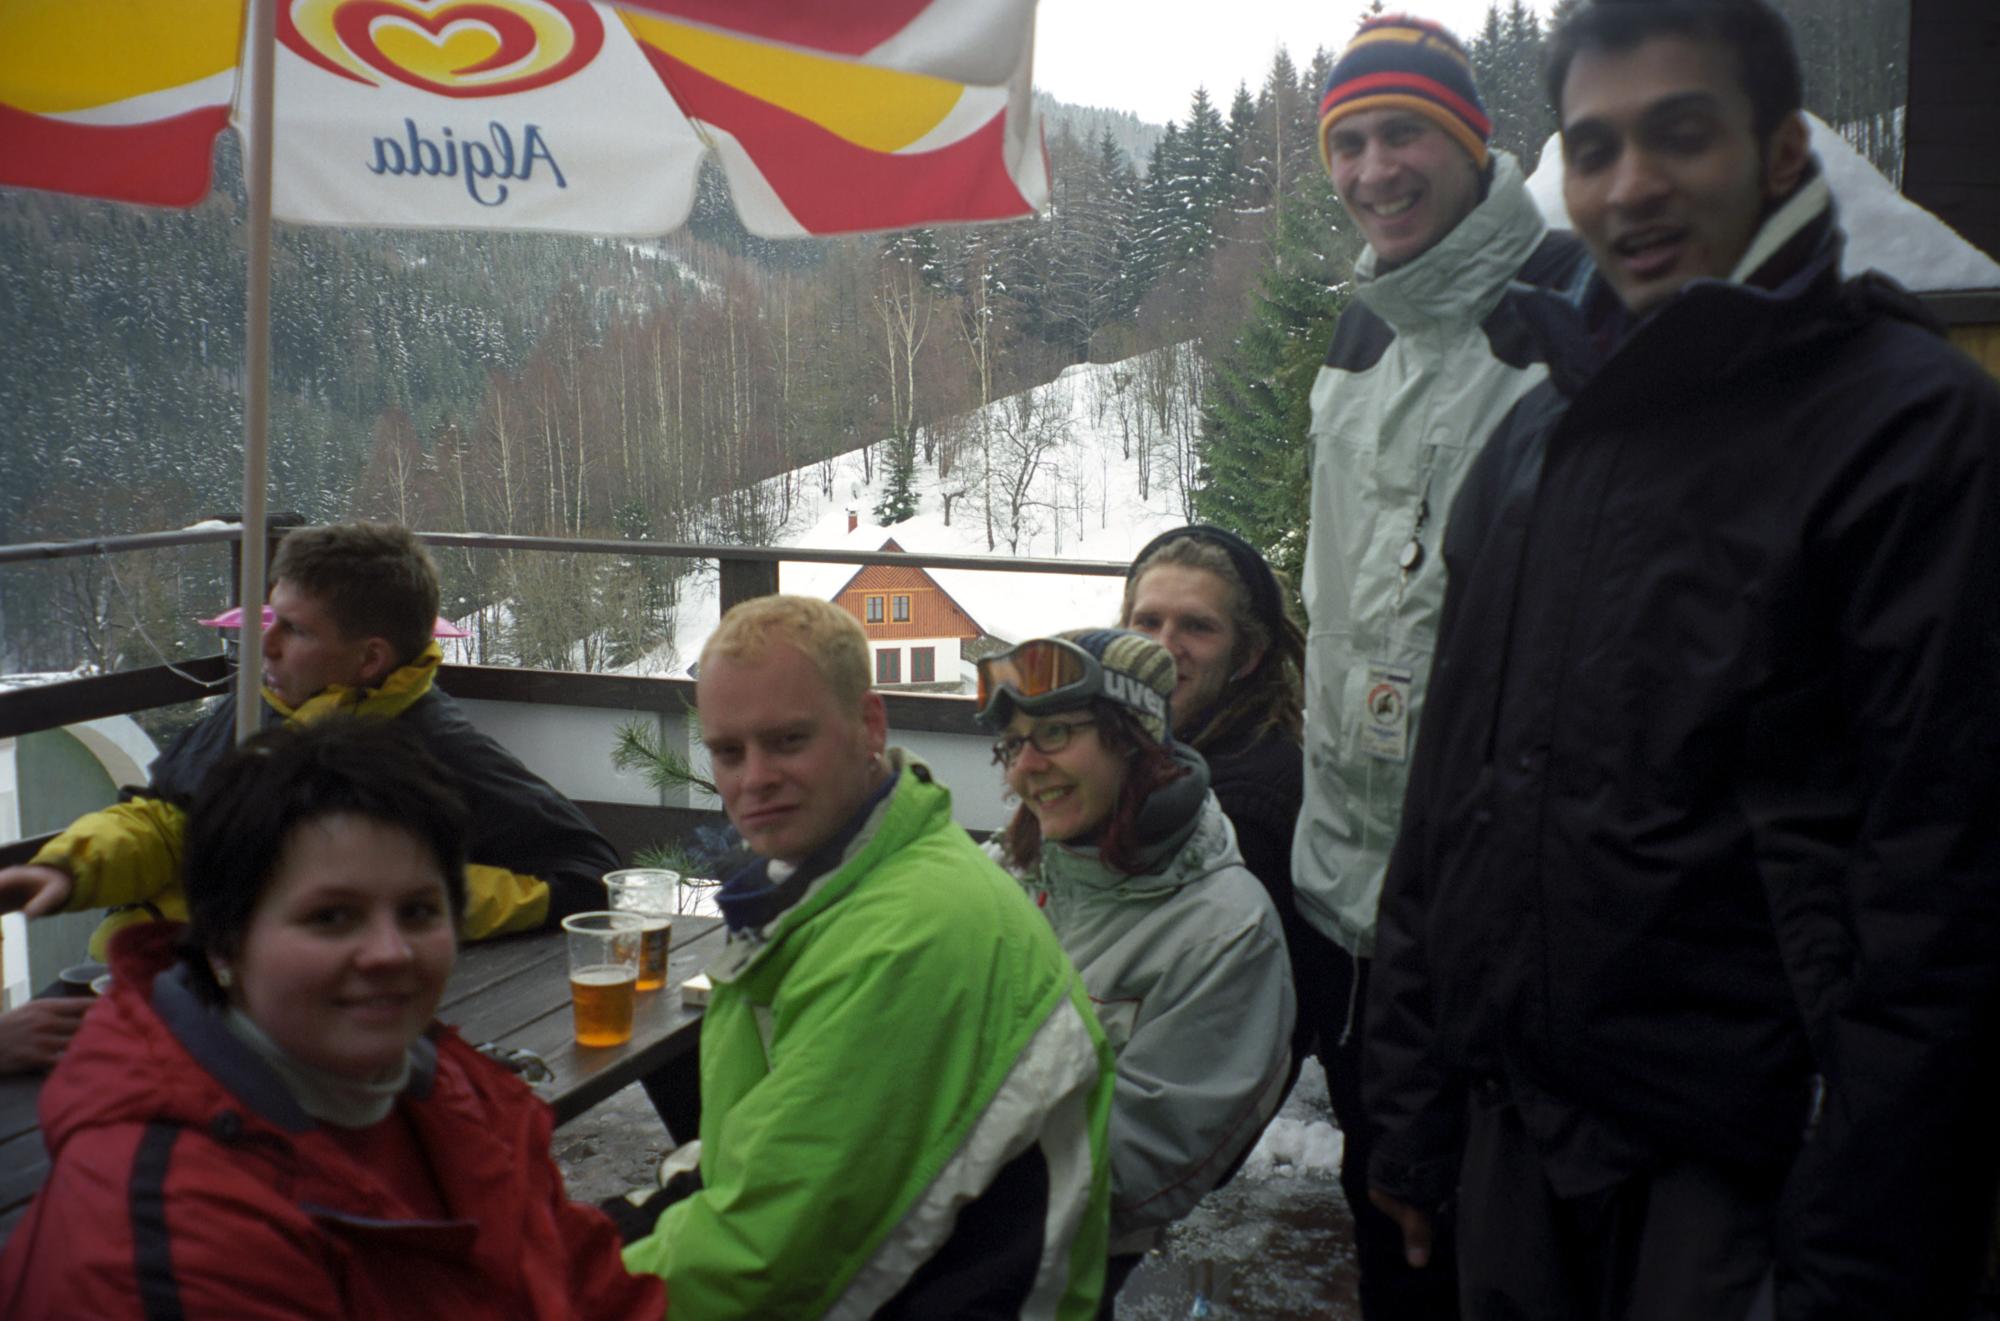 Czech Republic - Ski Party